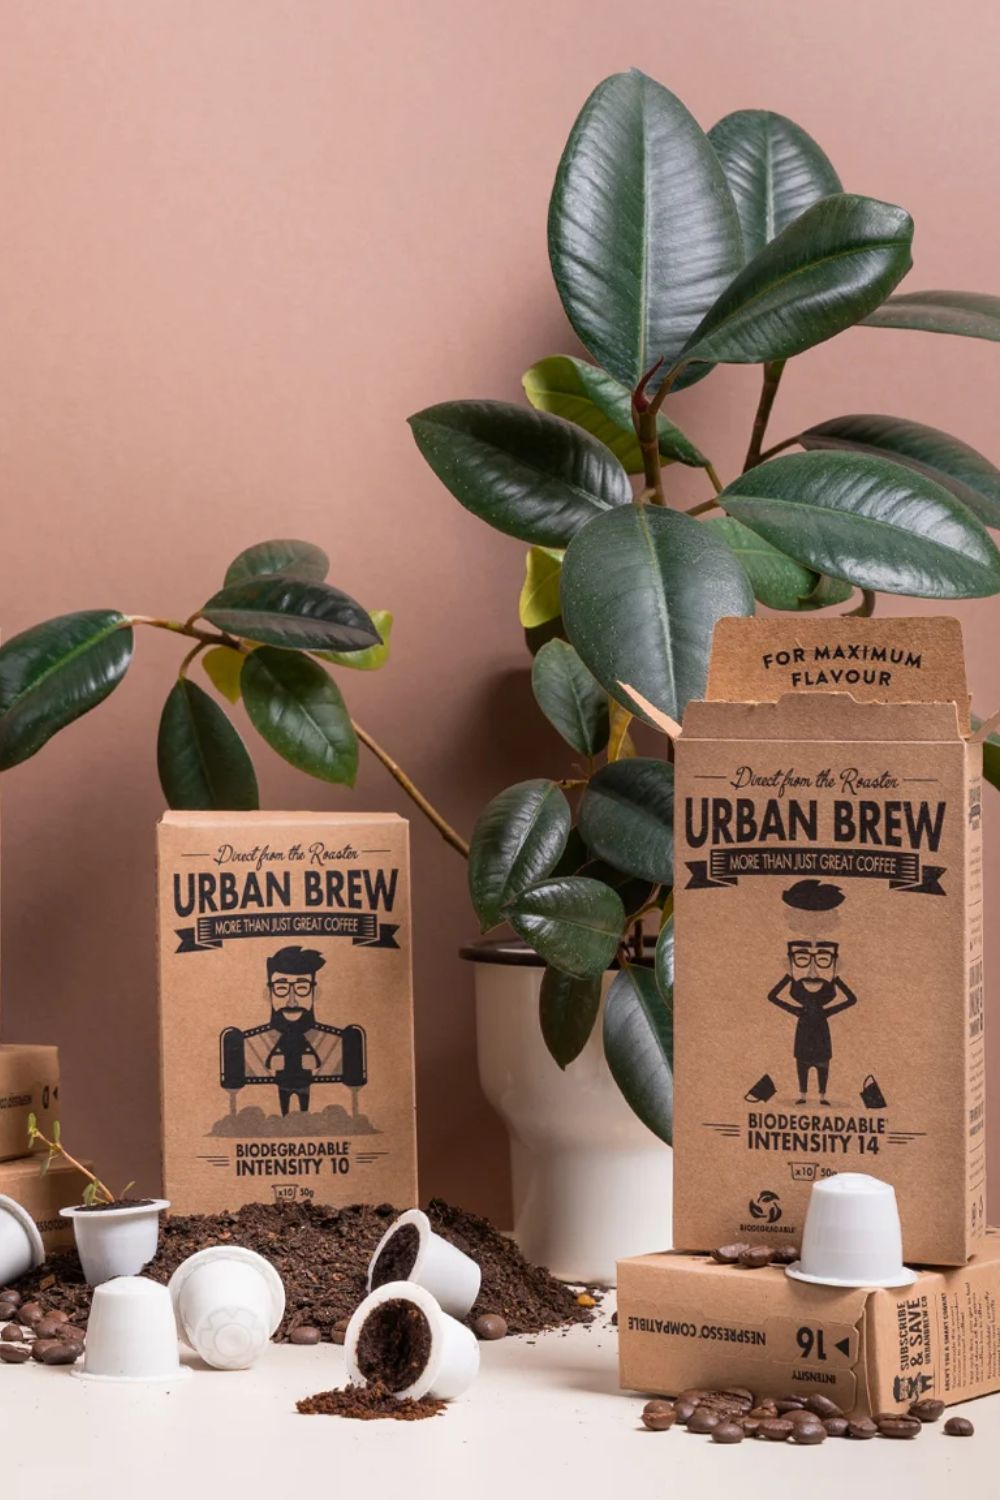 Urban brew coffee subscription